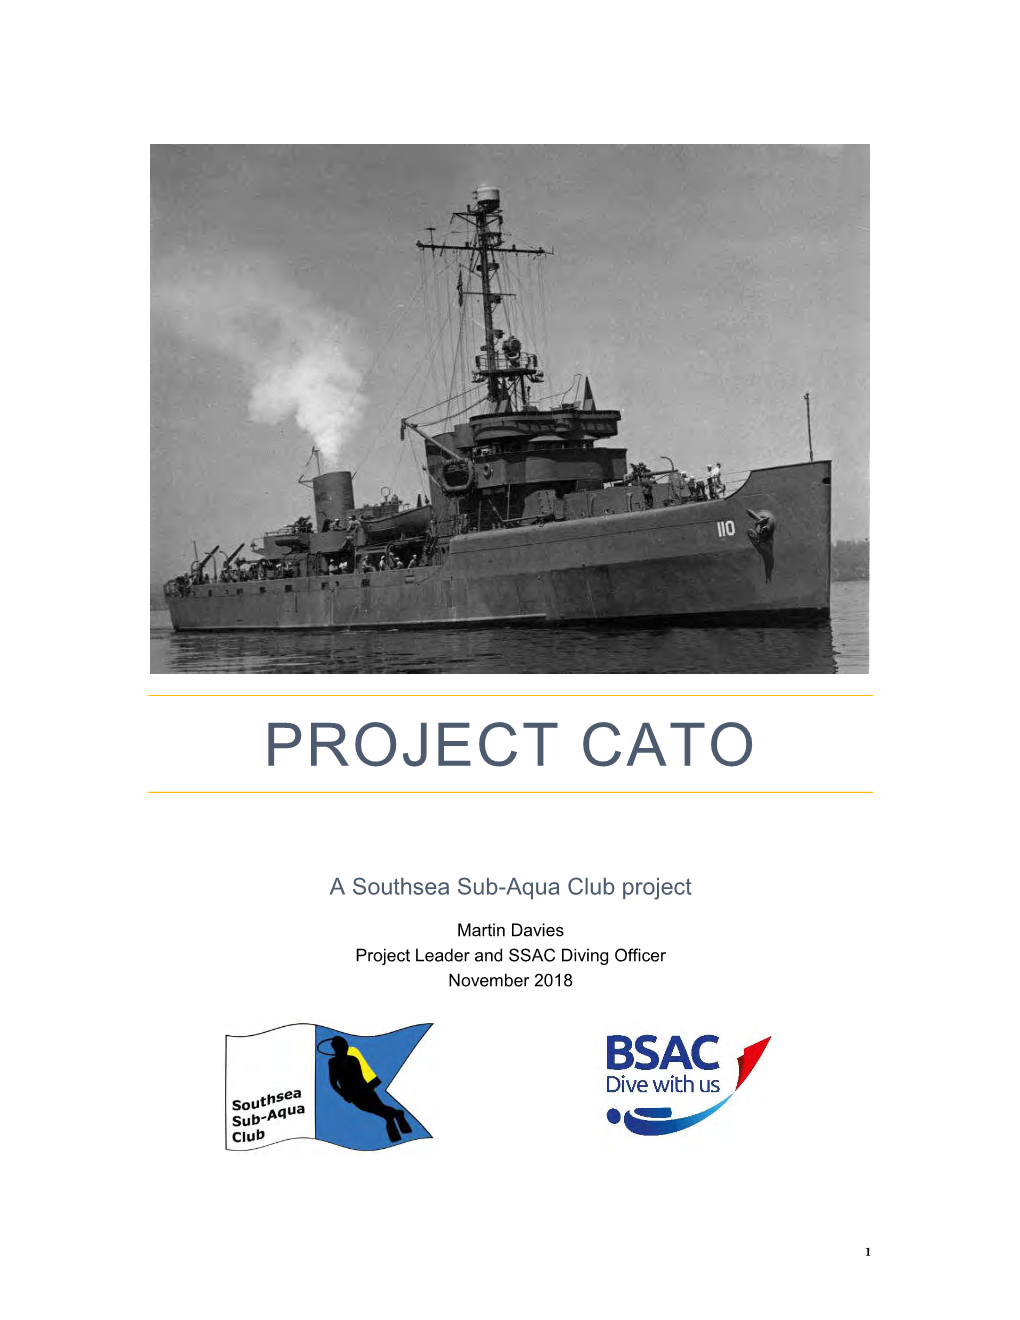 Project Cato